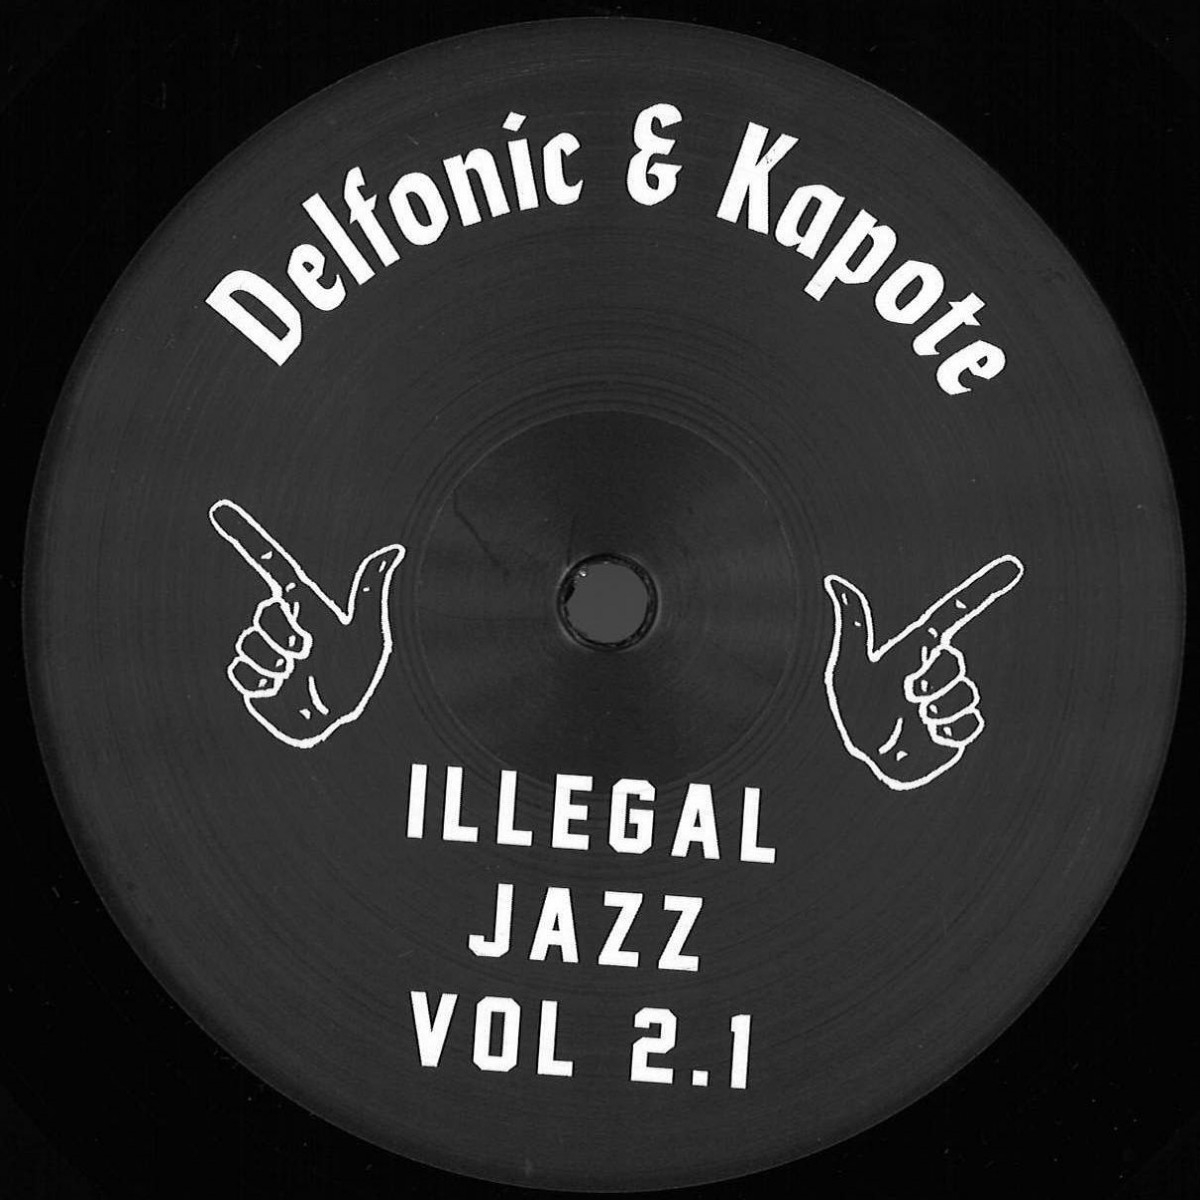 Delfonic & Kapote - Illegal Jazz Vol 2.1